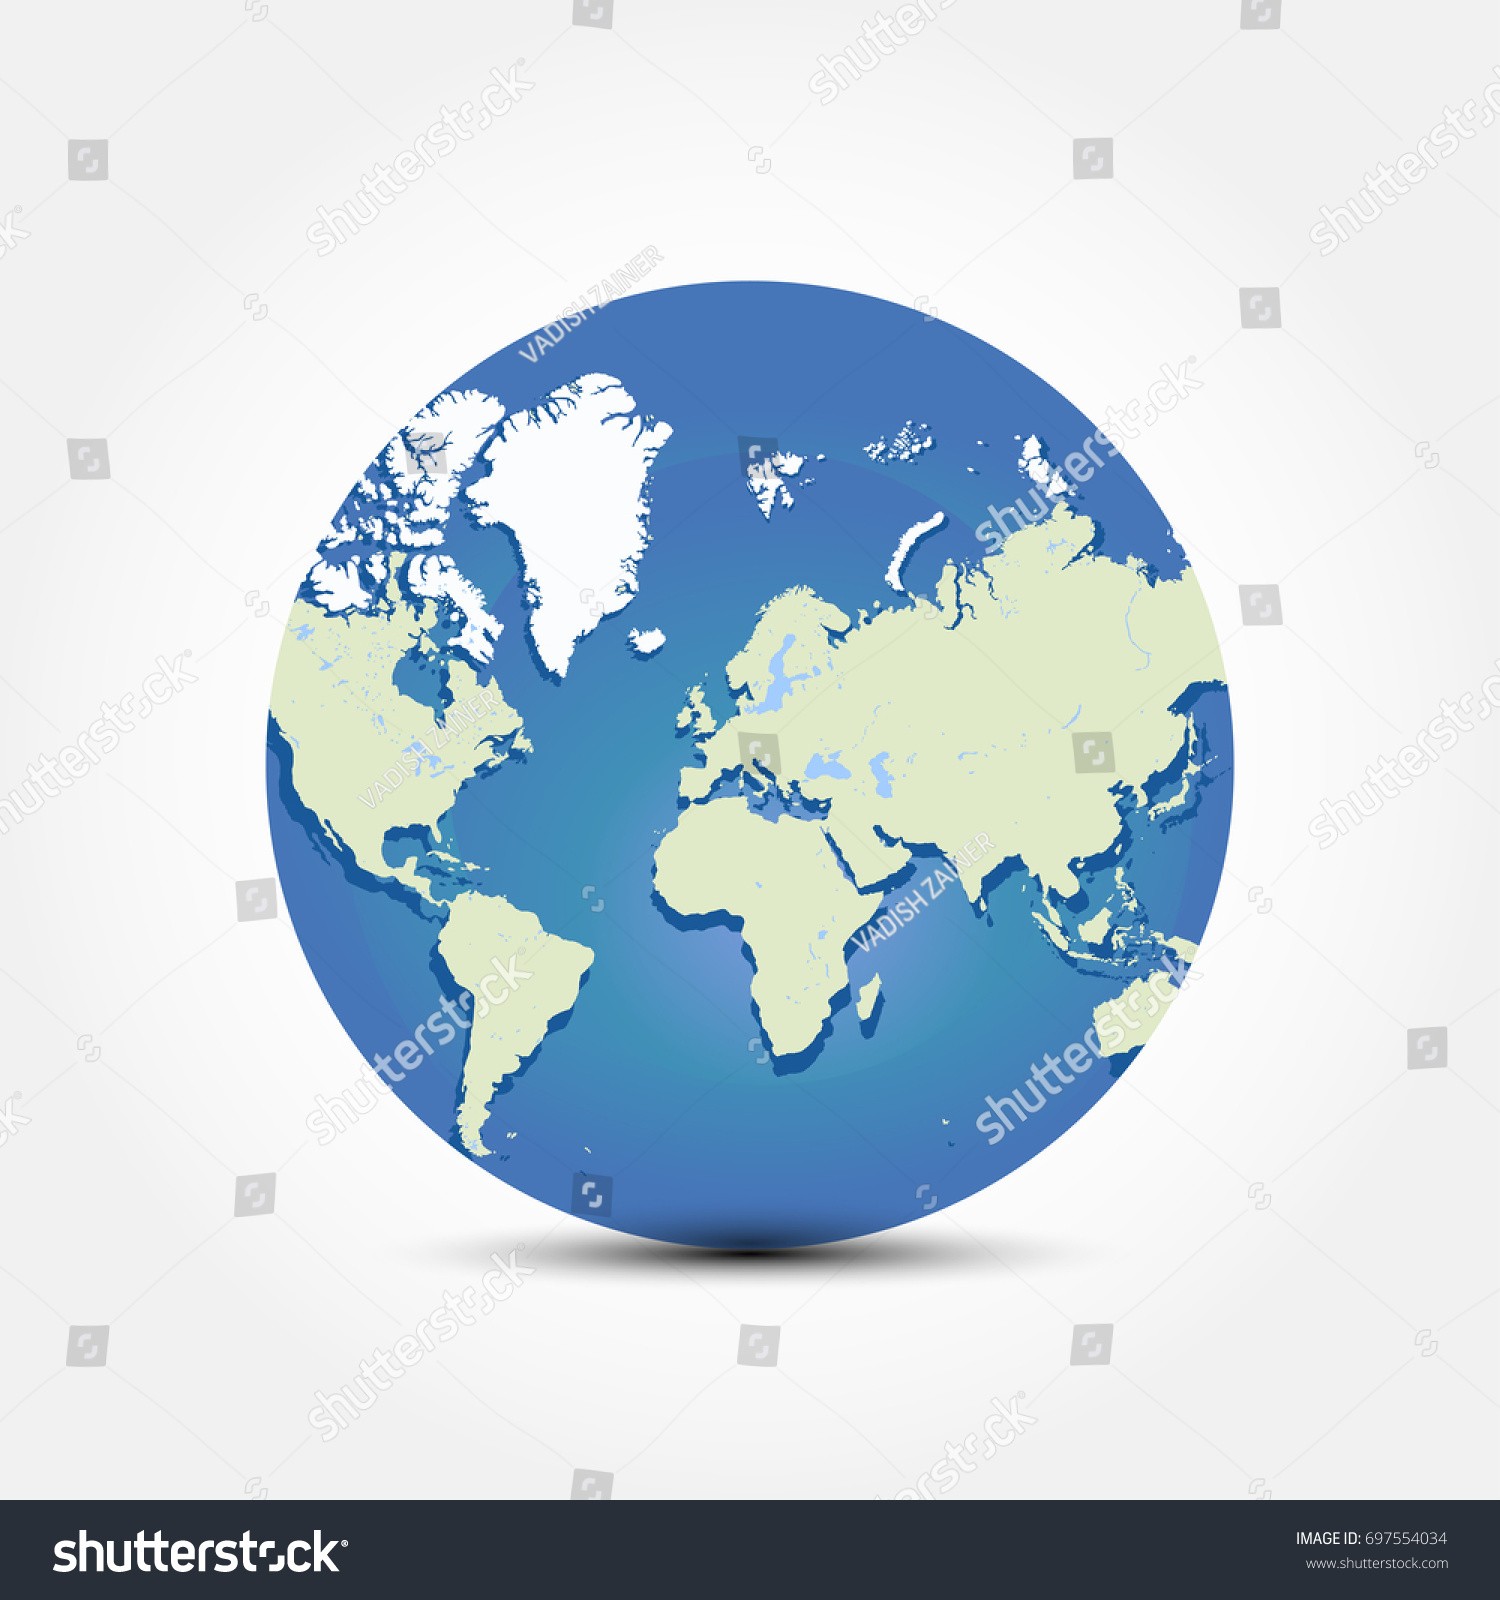 World Map Round Images New Round Globe World Map Flat Vector Stock ...